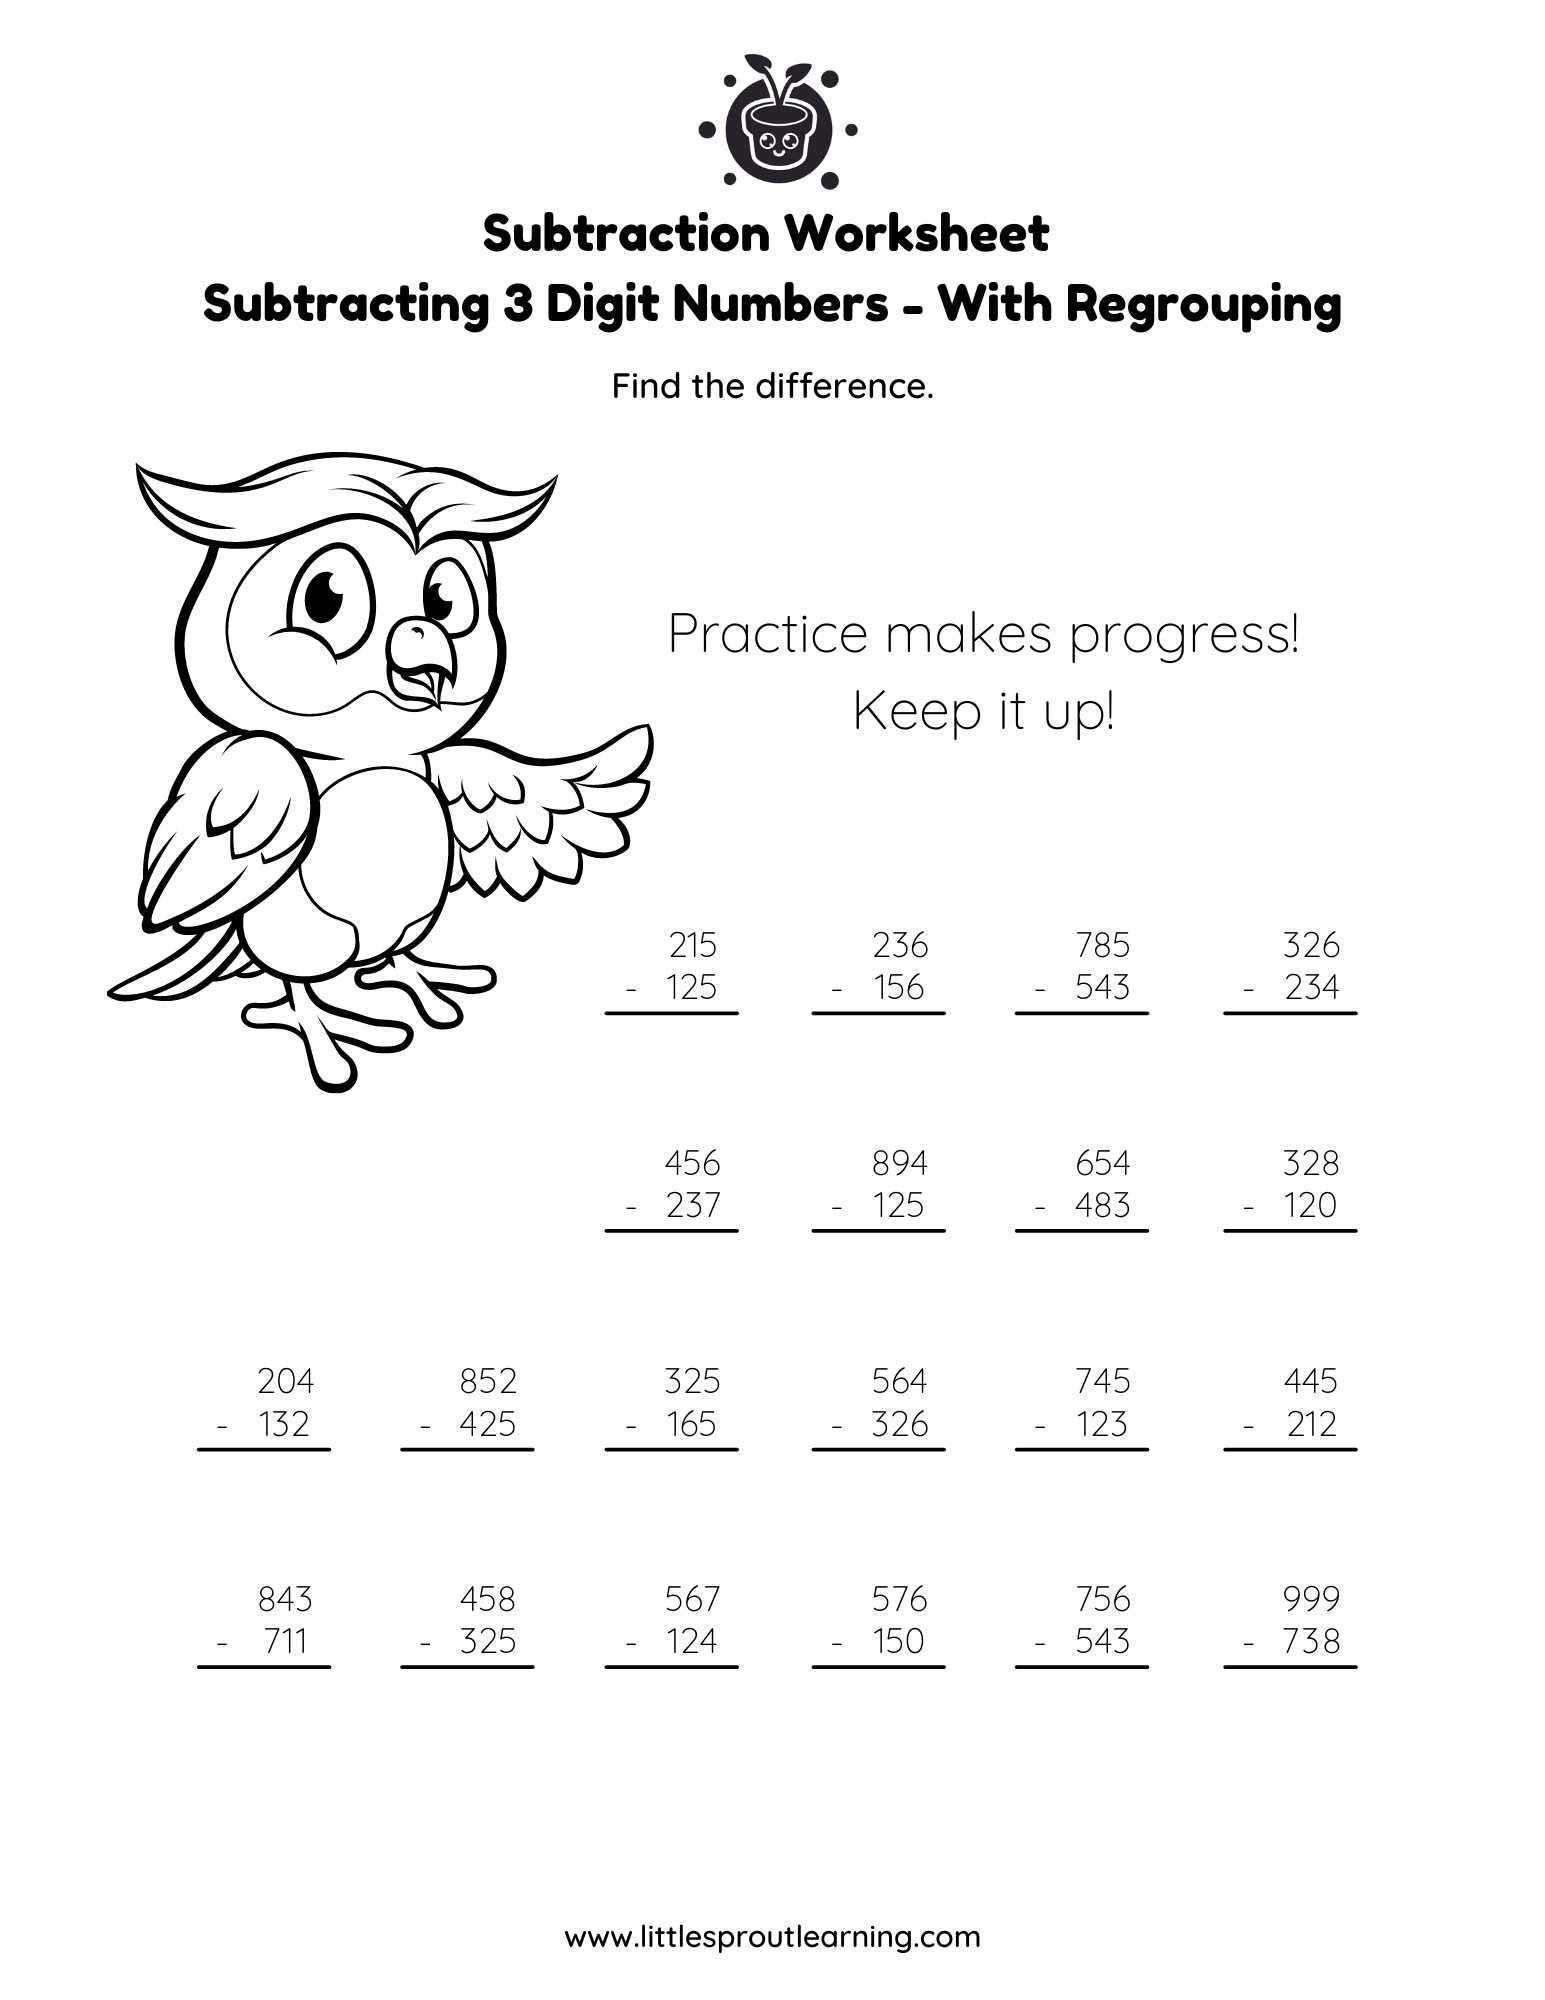 Math Practice Worksheet 3 Digit Number subtraction With Grade 4 Subtraction Worksheets